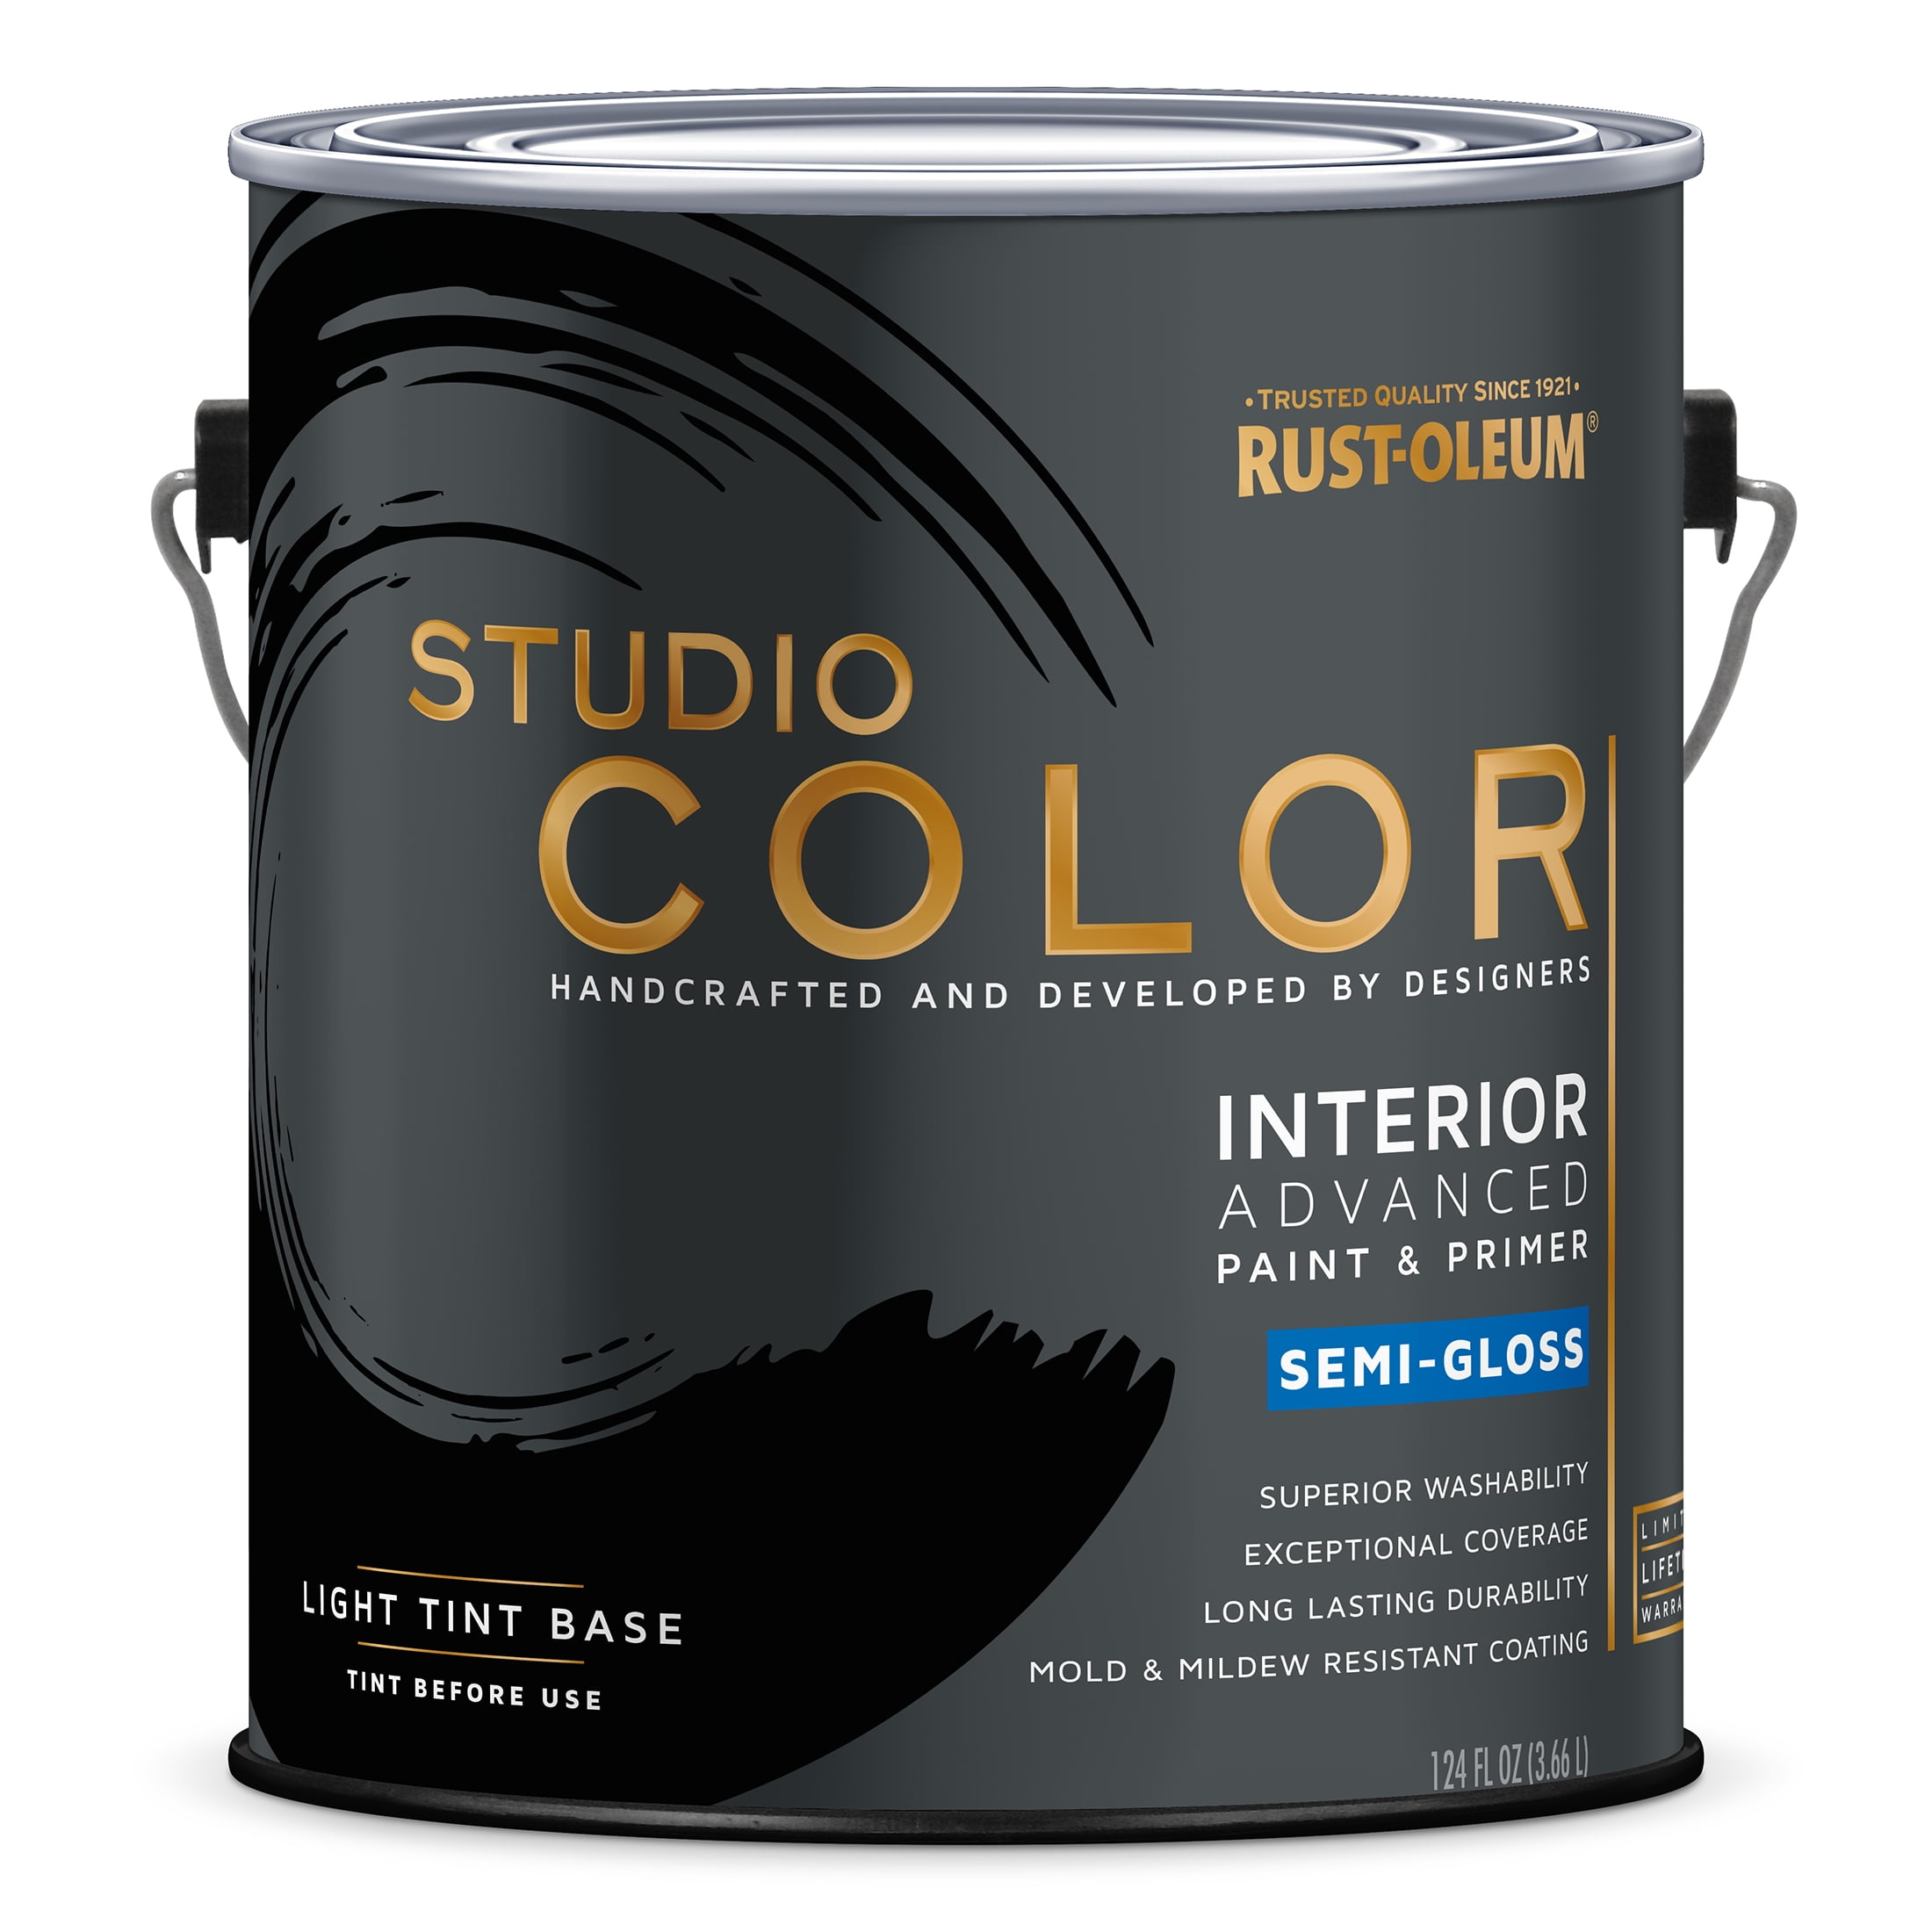 Light Base, Rust-Oleum Studio Color Advanced Paint + Primer Interior Semi-Gloss, Gallon